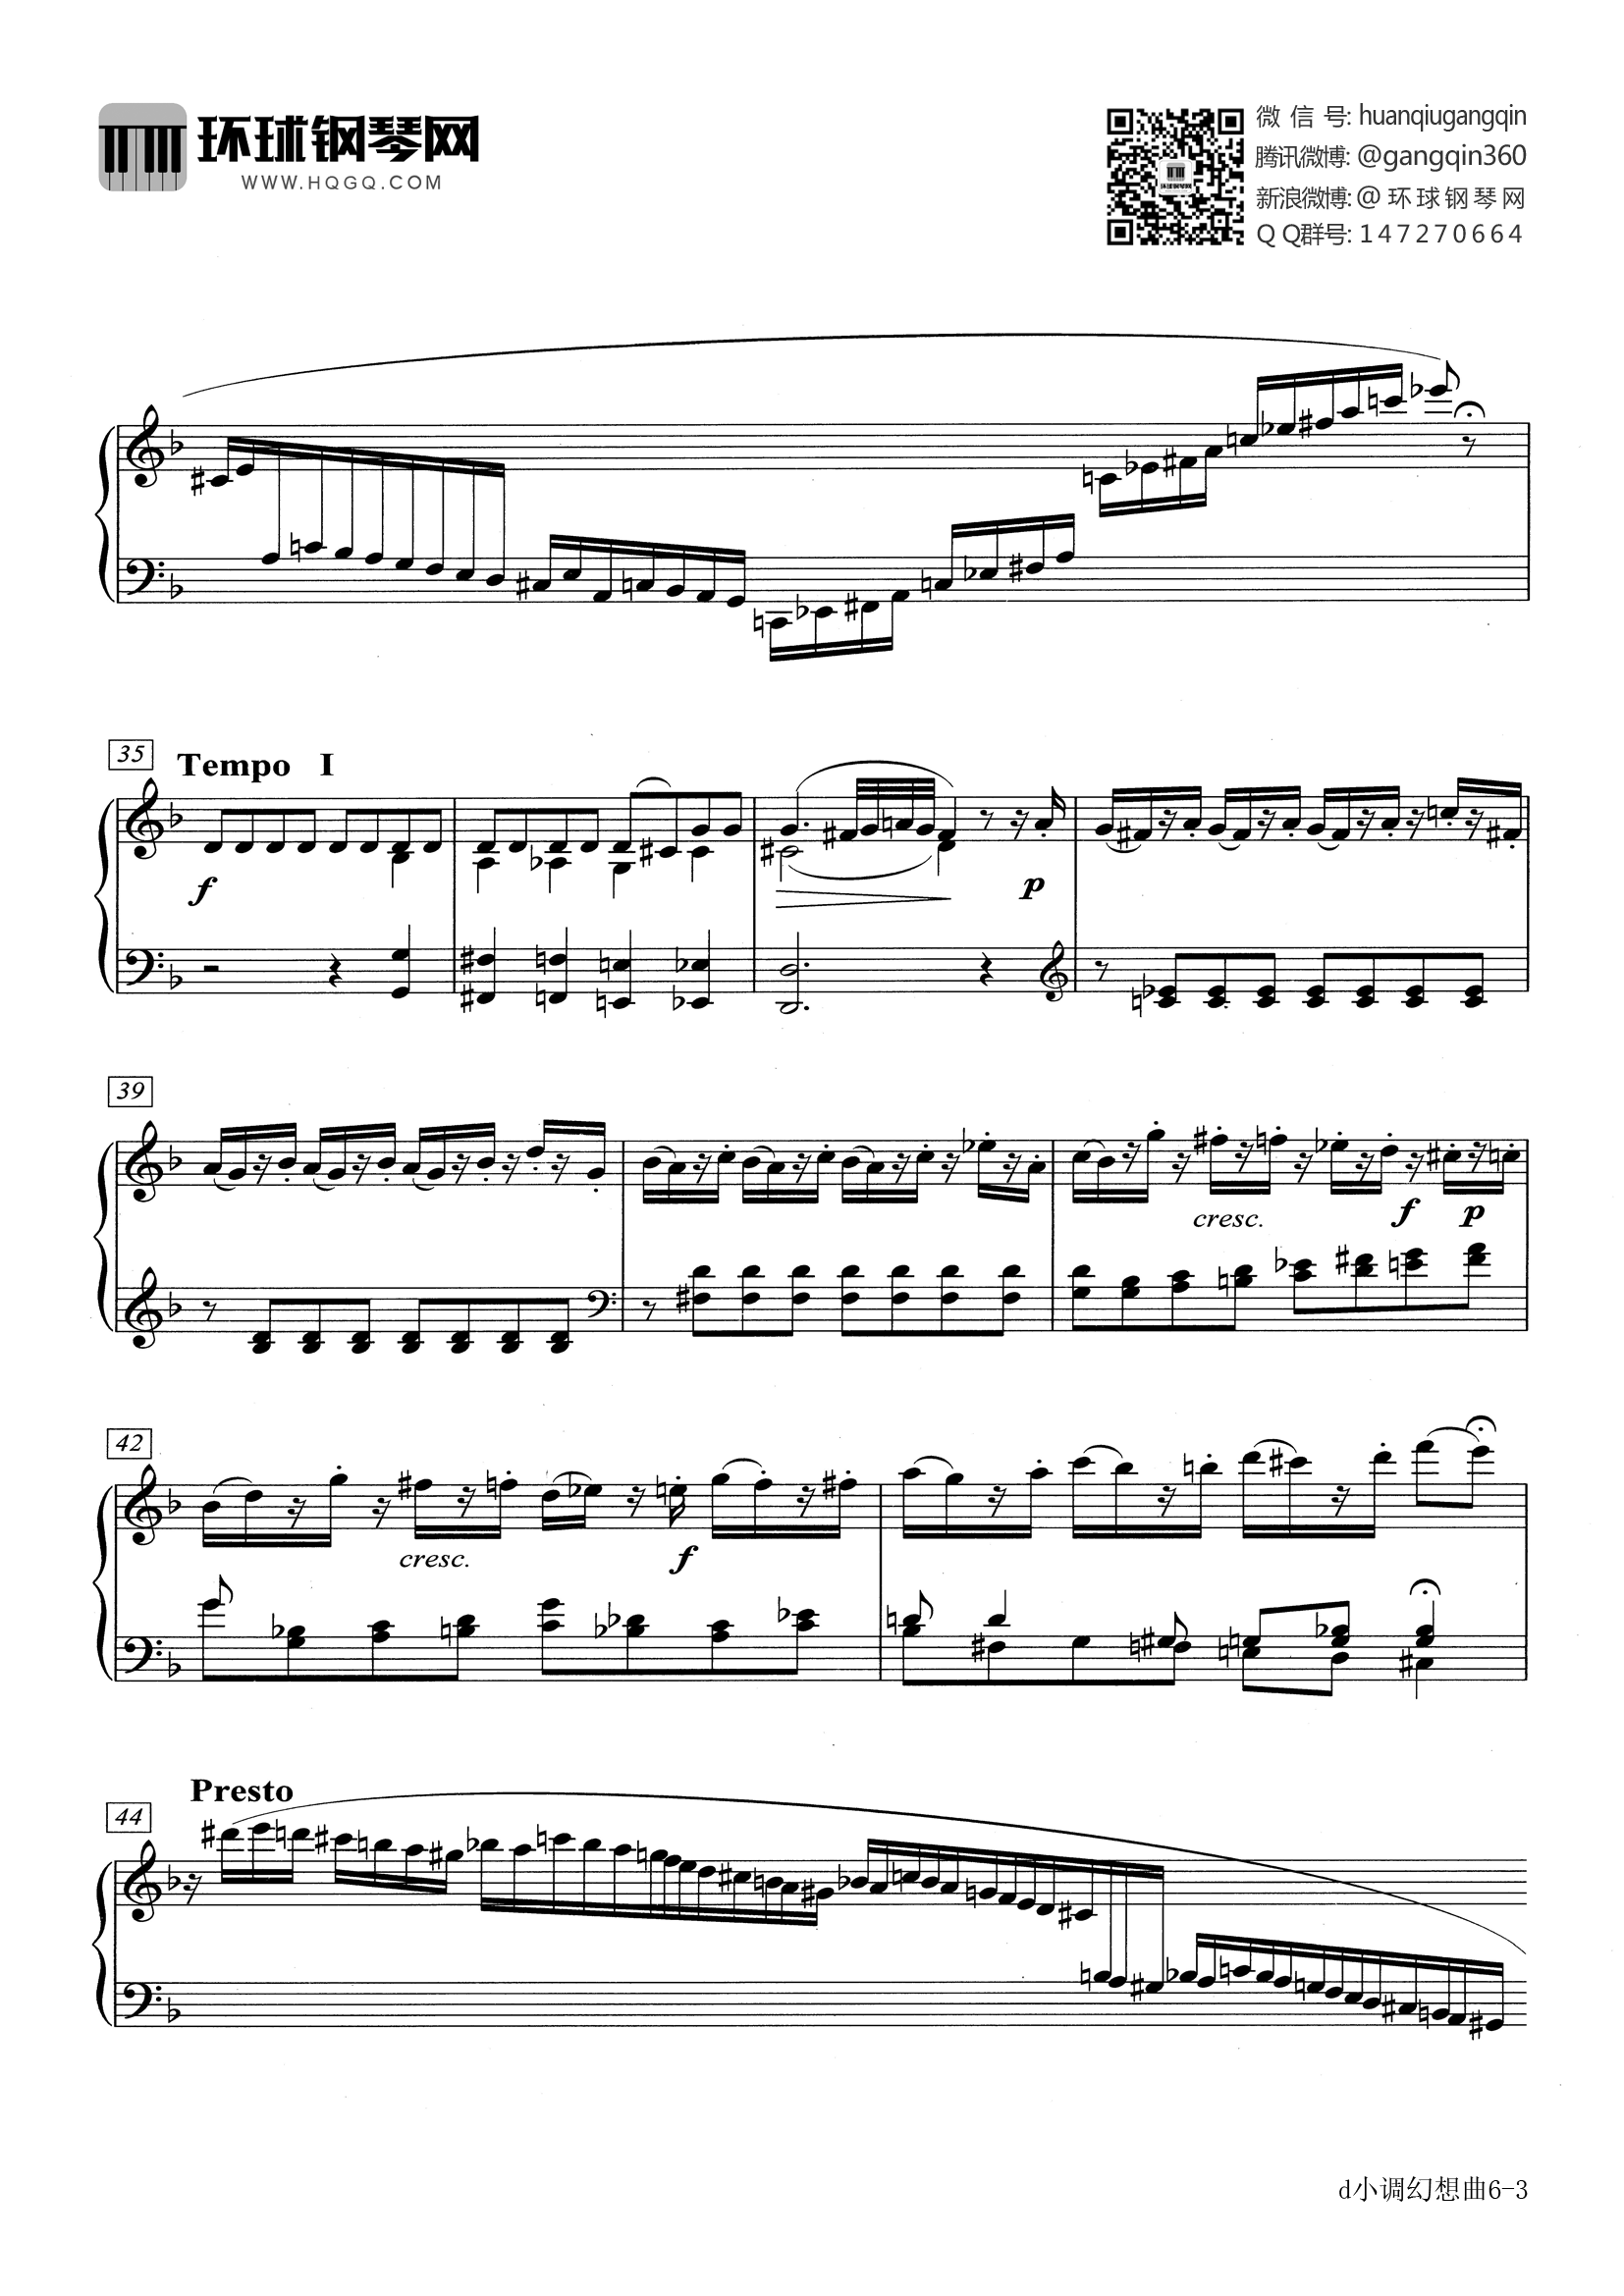 d小调幻想曲(k.397)-莫扎特-古典_钢琴谱 - 钢琴谱